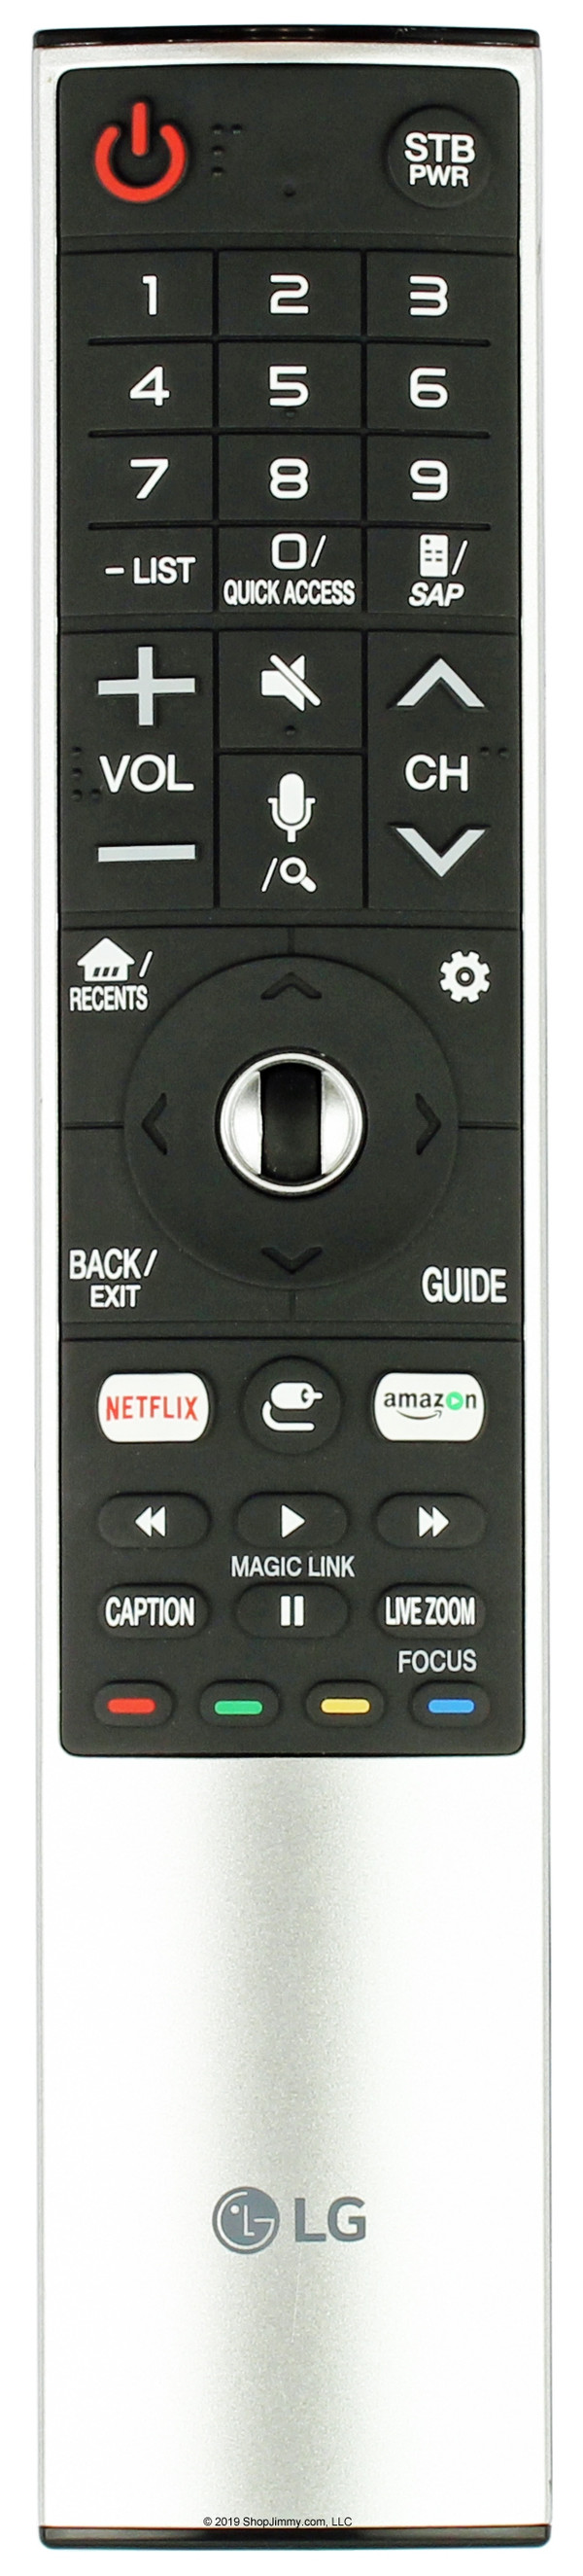 LG AN-MR700 / AGF78381202 LED TV Magic Remote Control--Open Bag